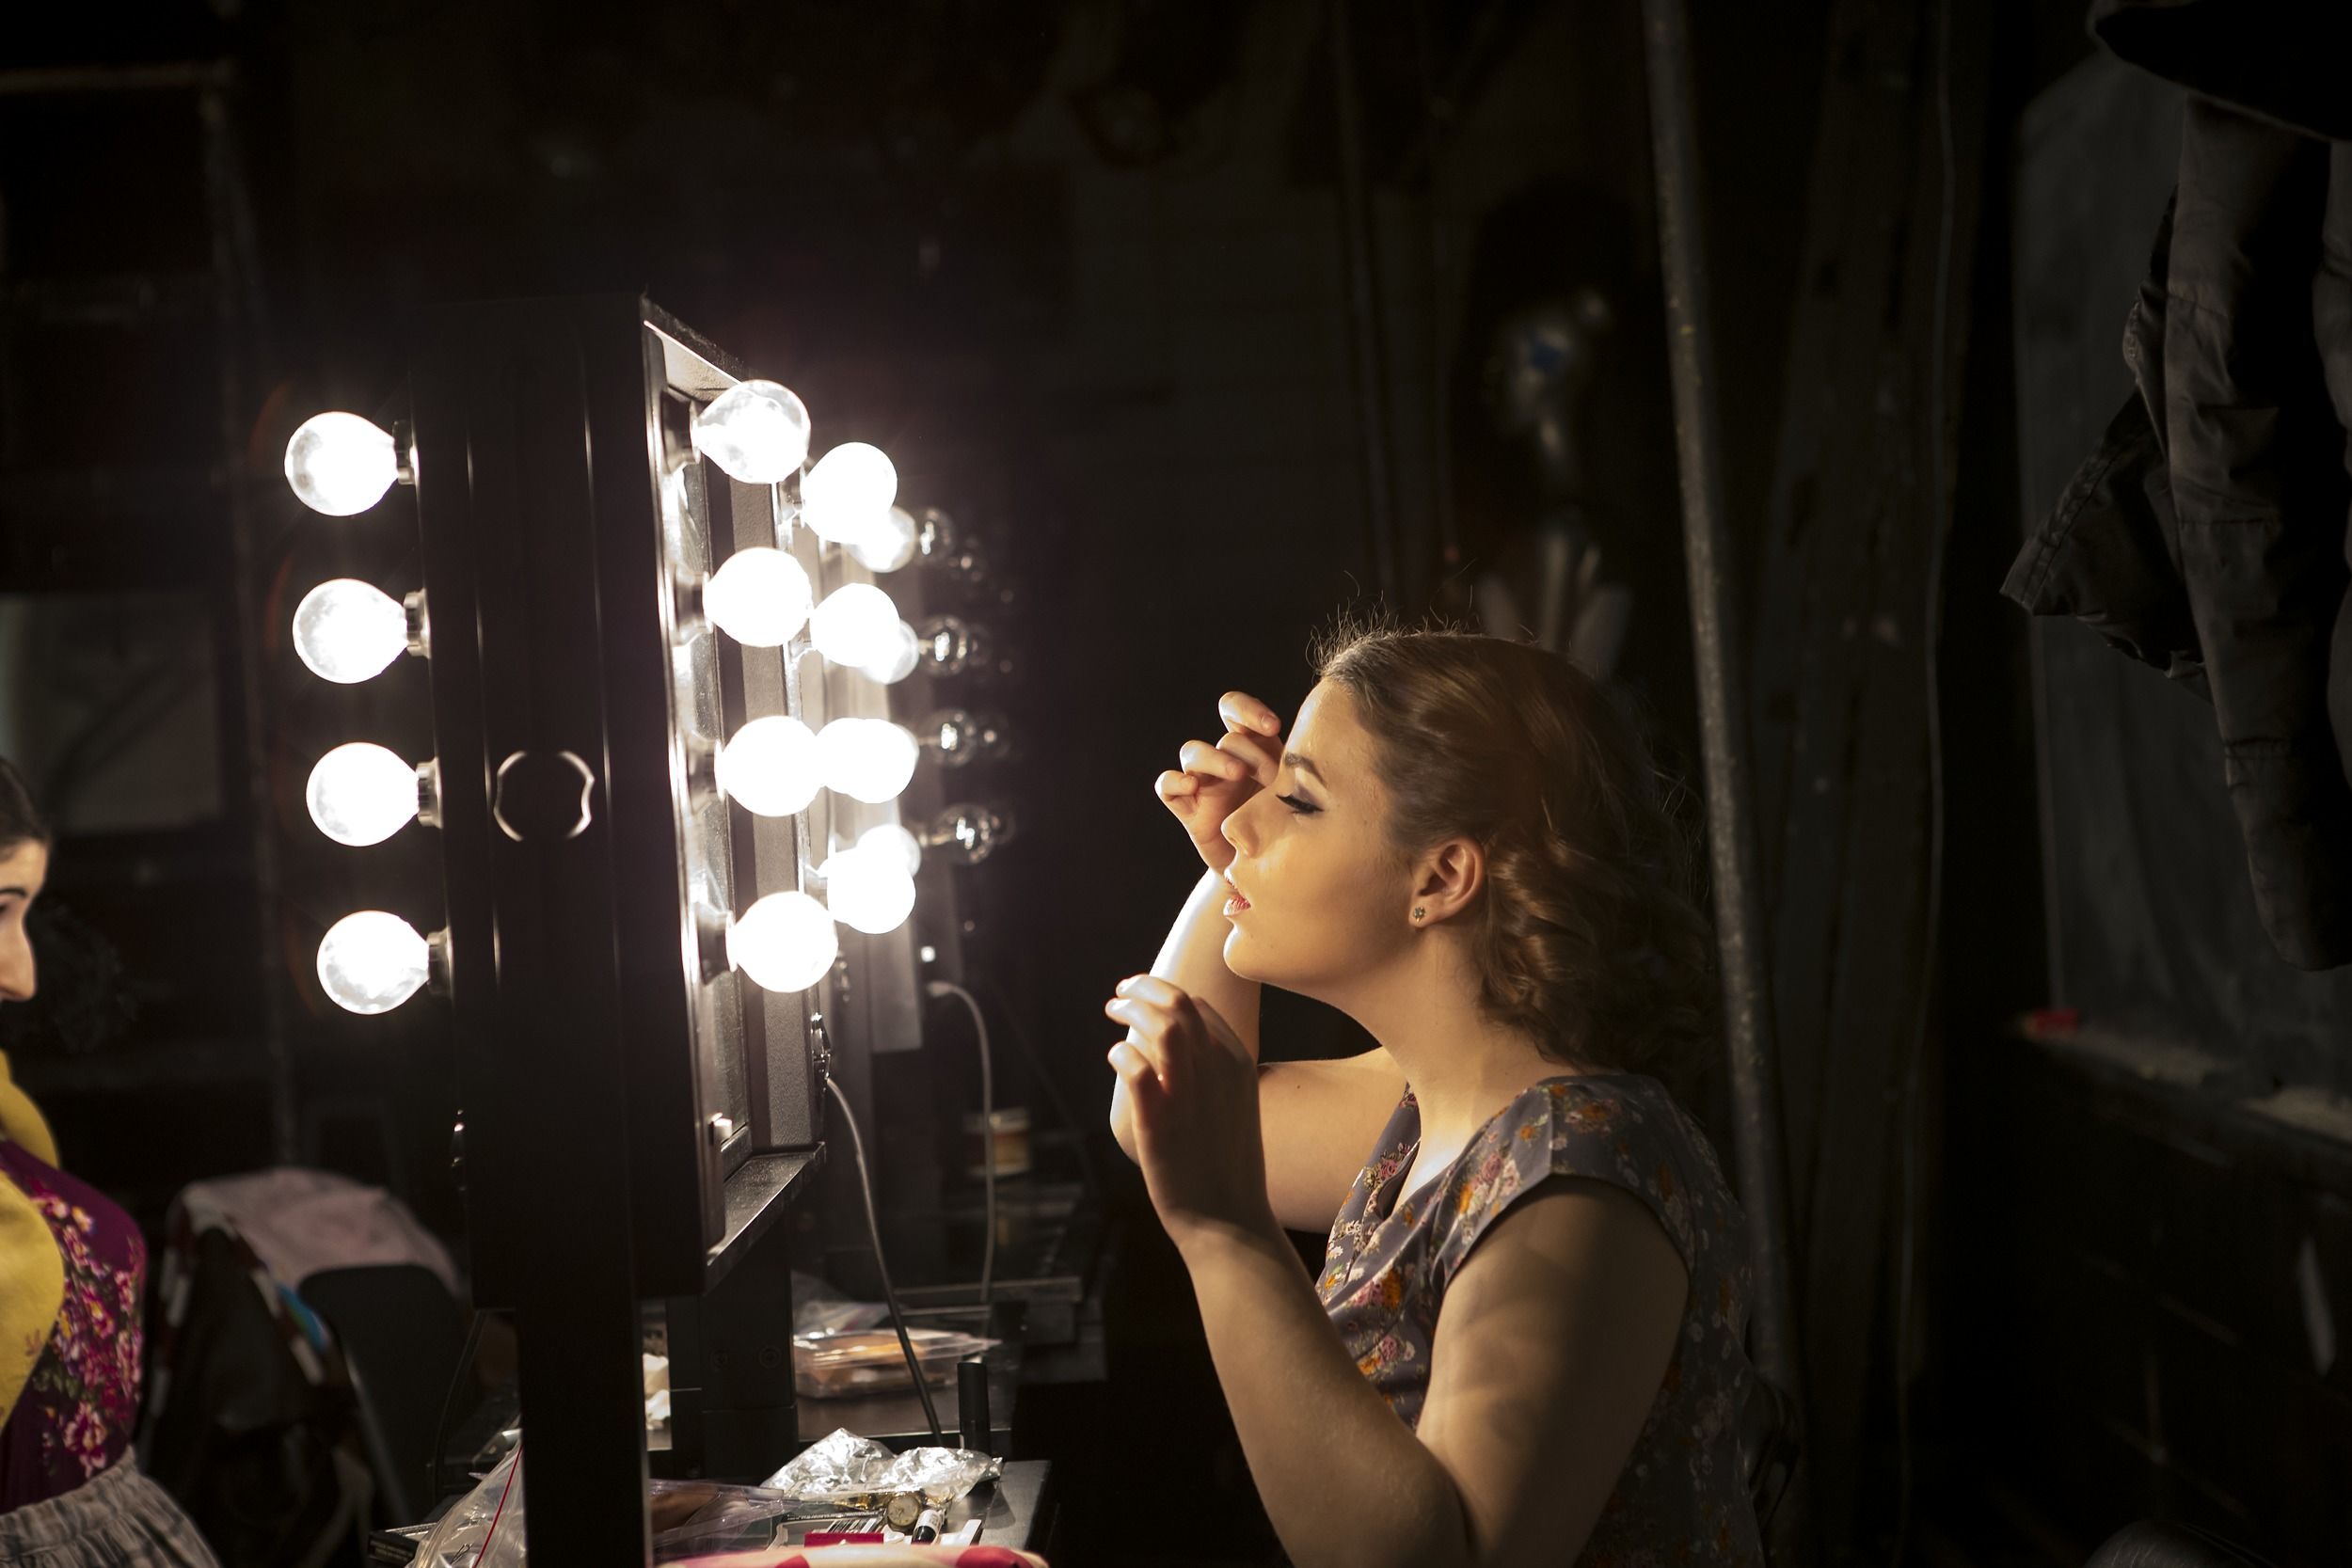 A Temple student applies makeup backstage.